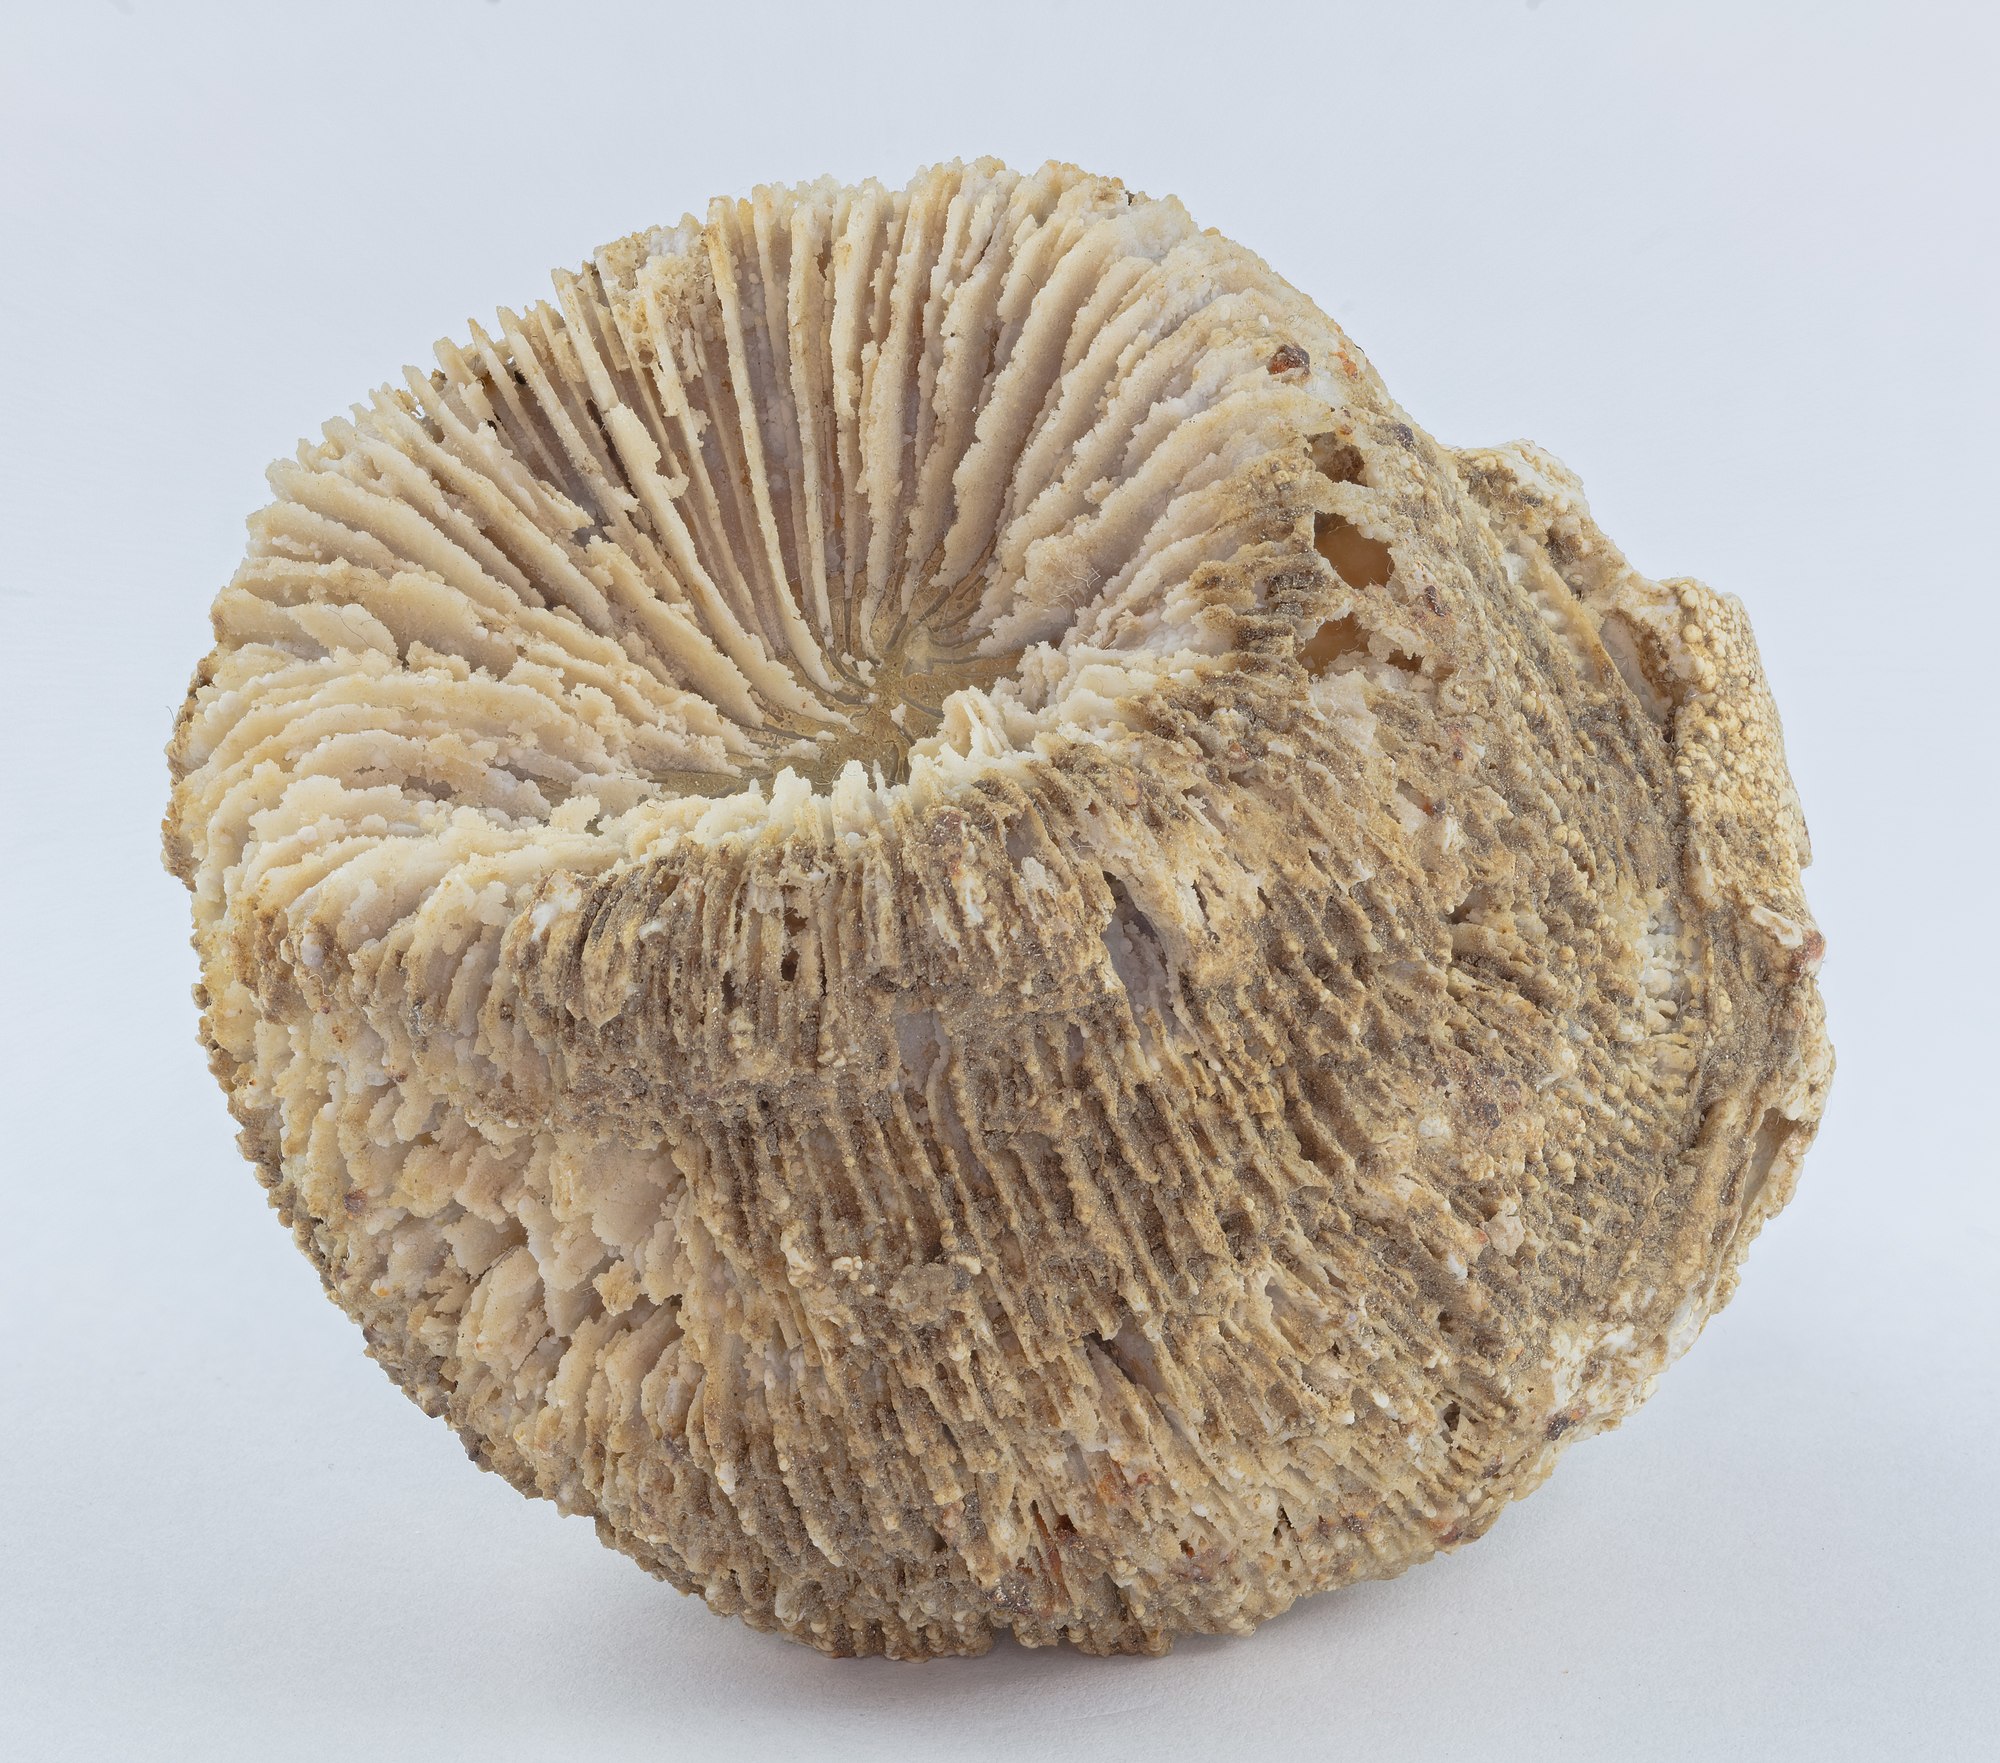 Coral fossil Montlivaltia obconica, Nattheim, Germany